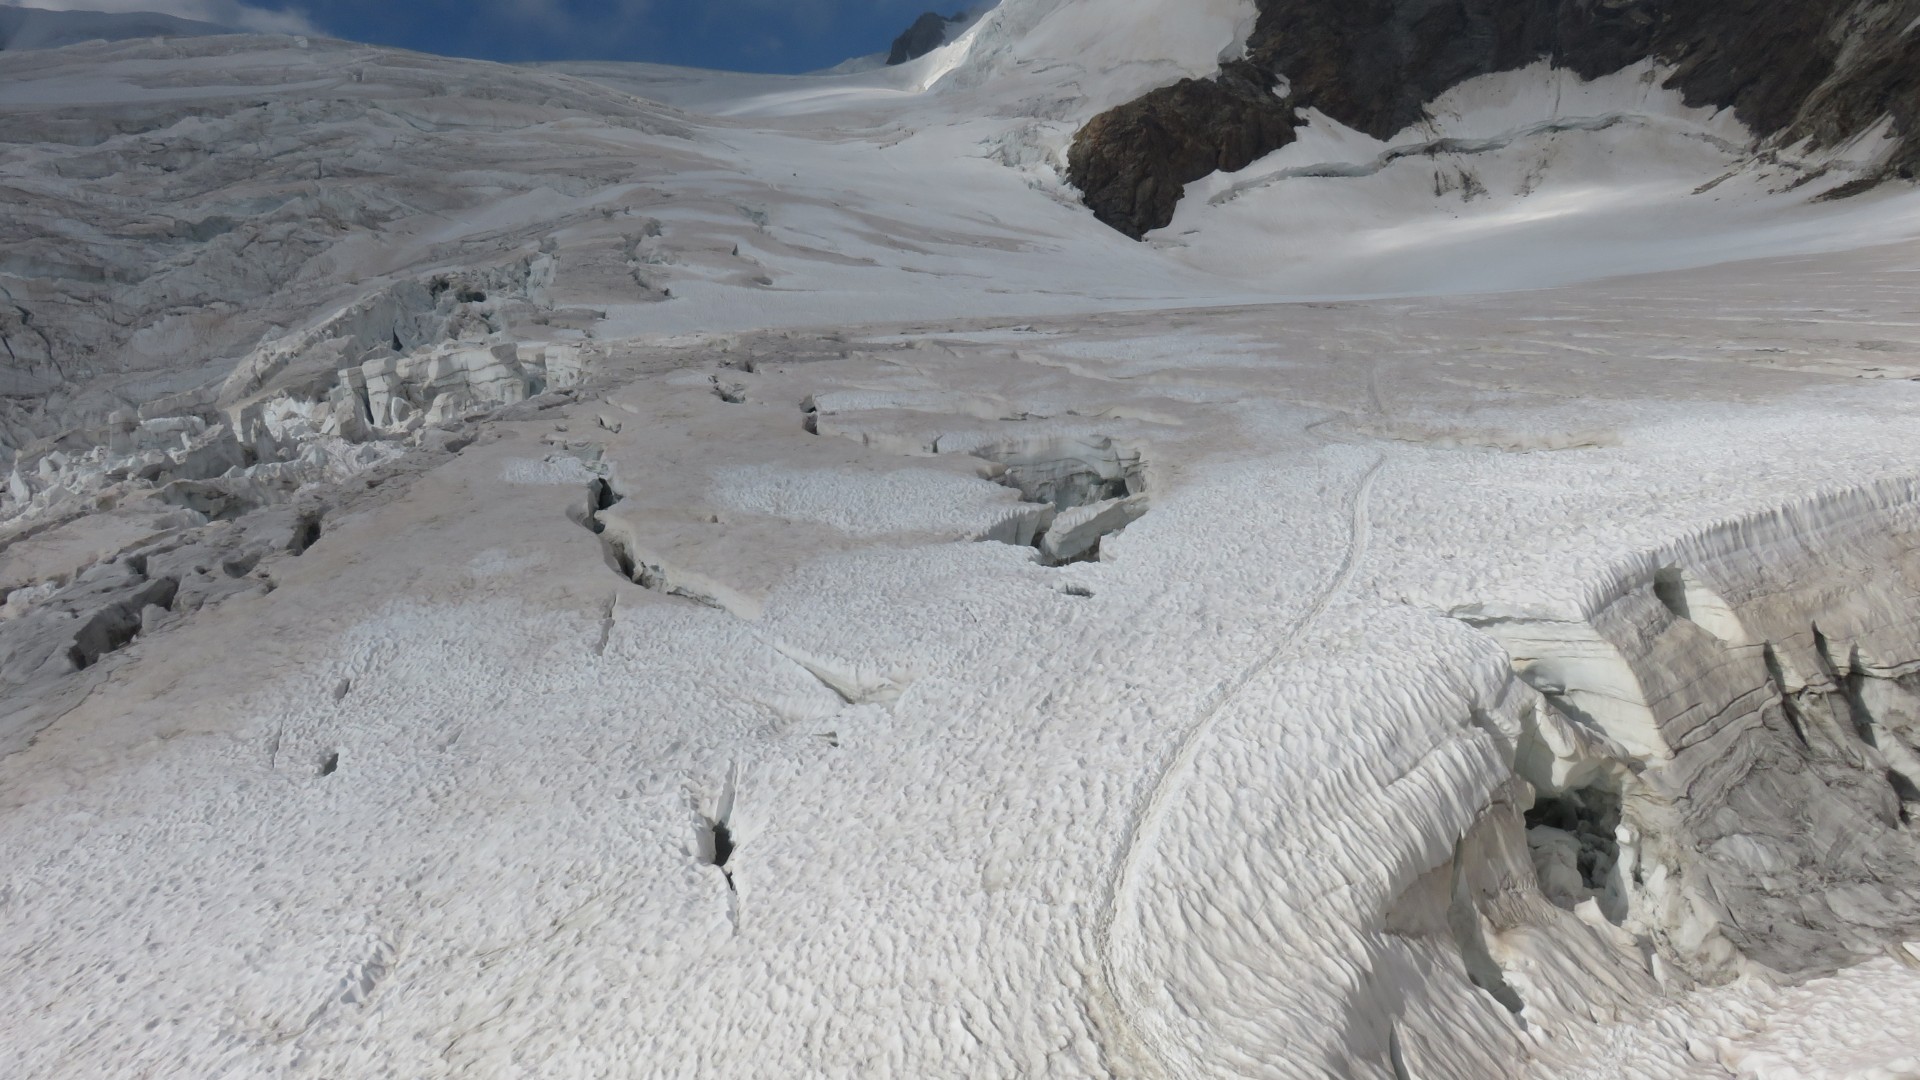 lys glacier from rifugio gnifetti